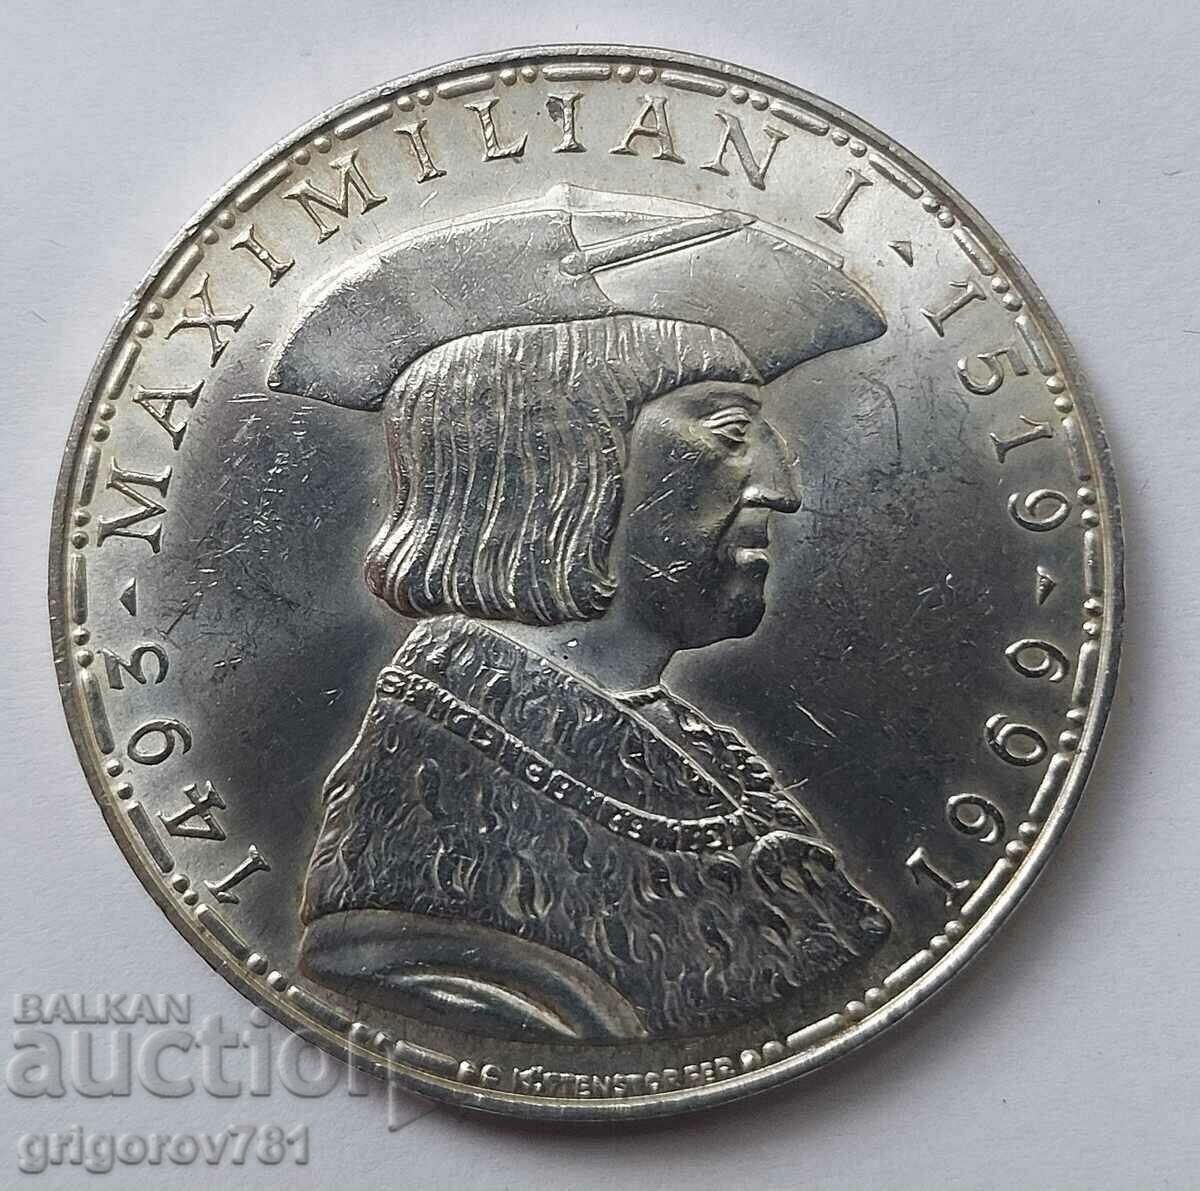 50 Shilling Silver Austria 1961 - Silver Coin #7